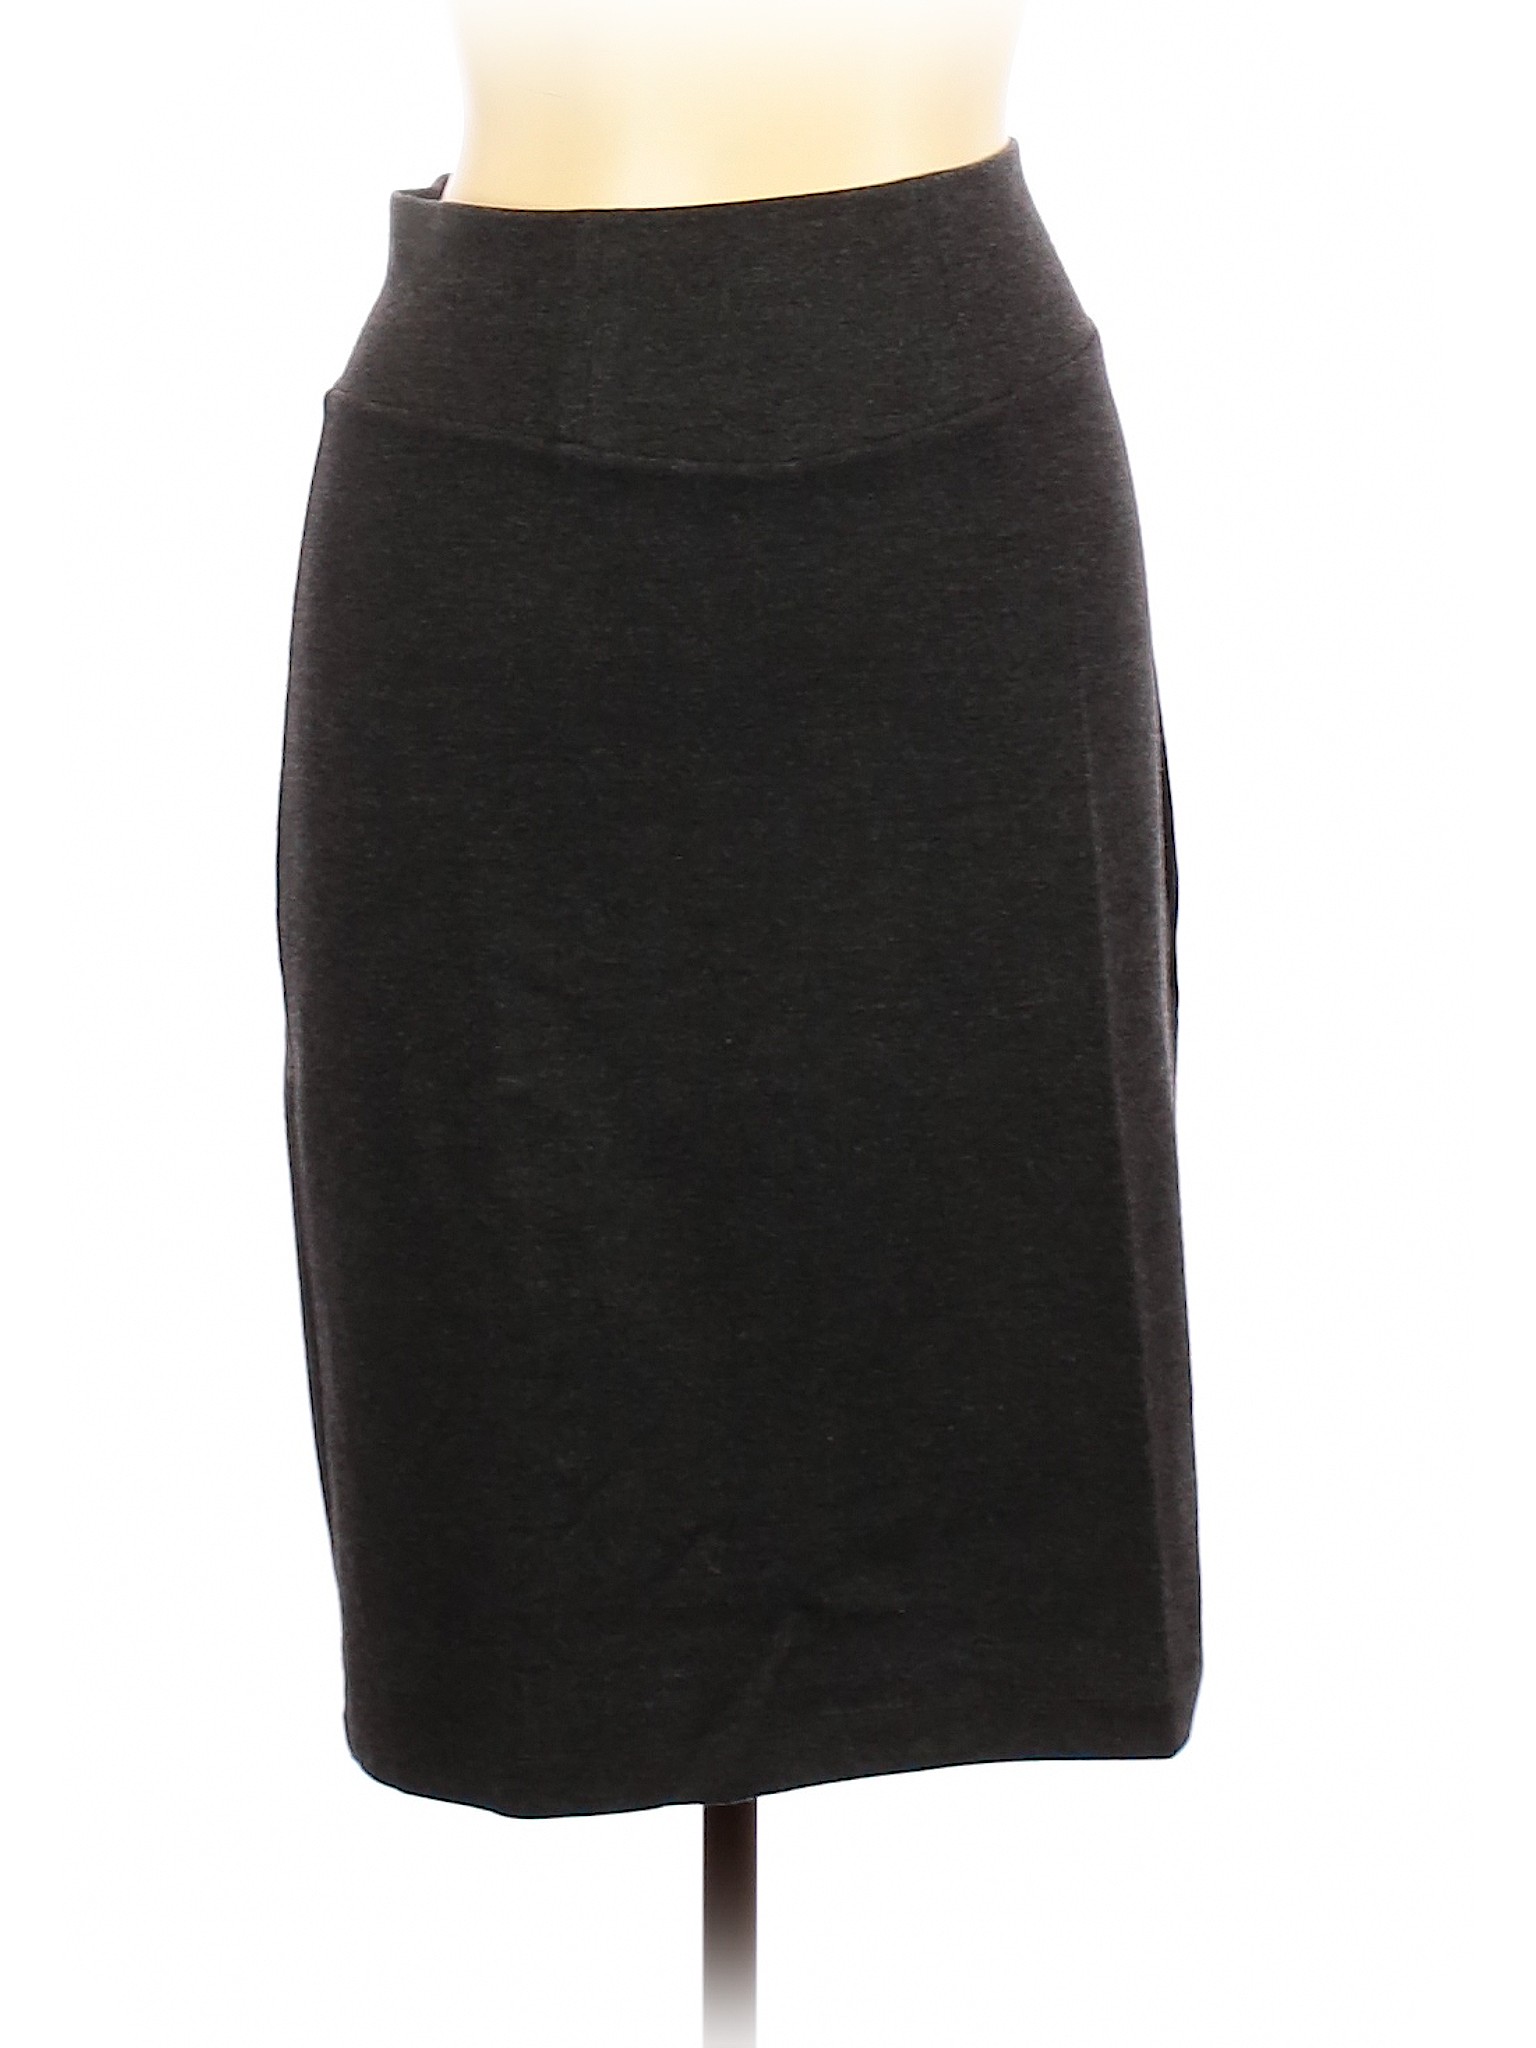 ONLY HEARTS Women Black Casual Skirt L | eBay